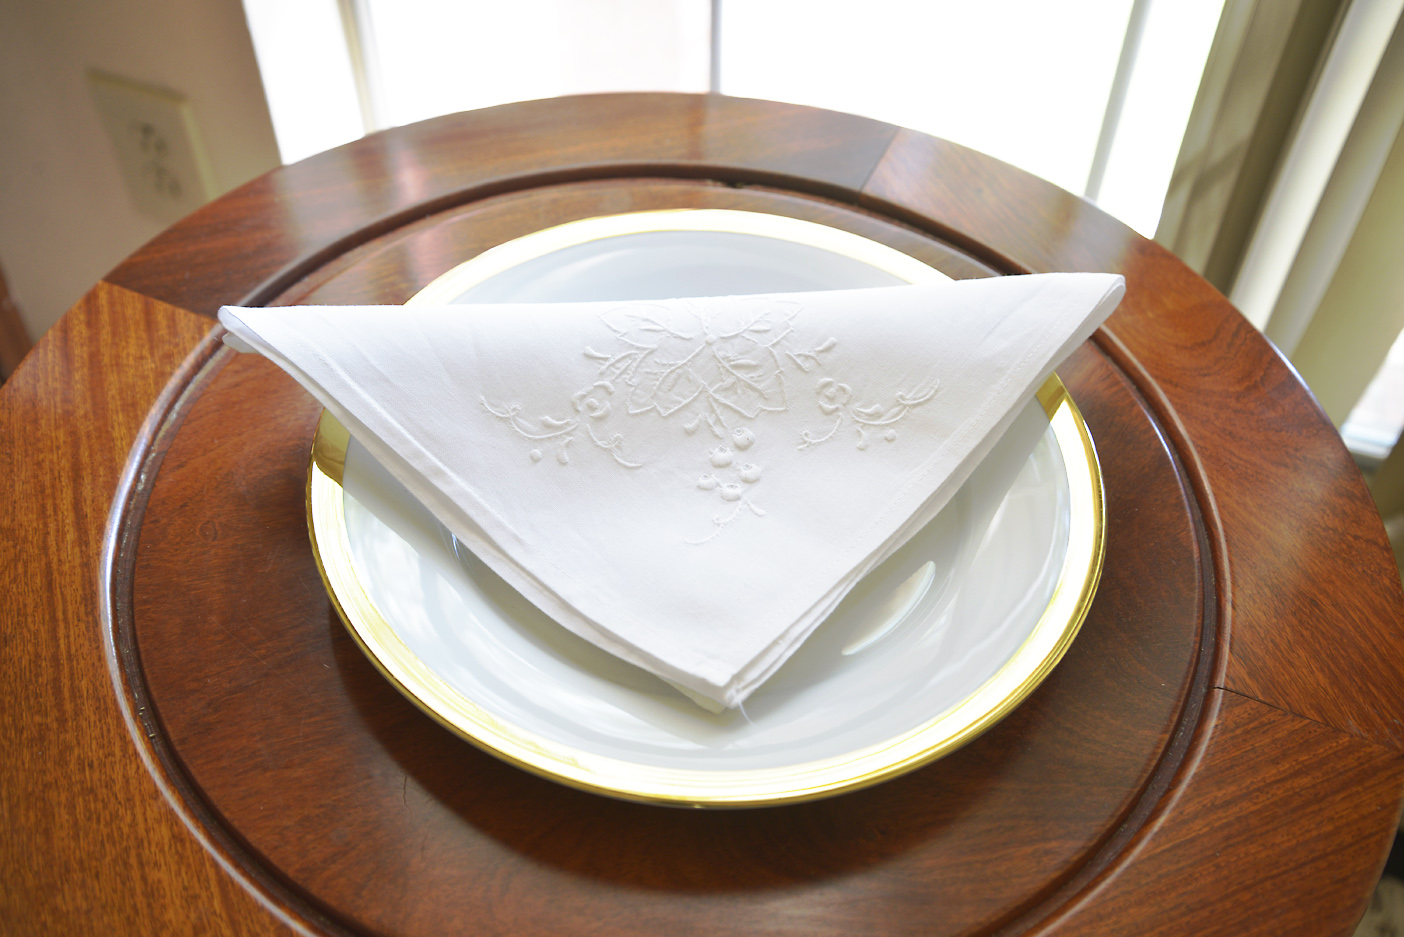 Embroidered dinner napkins